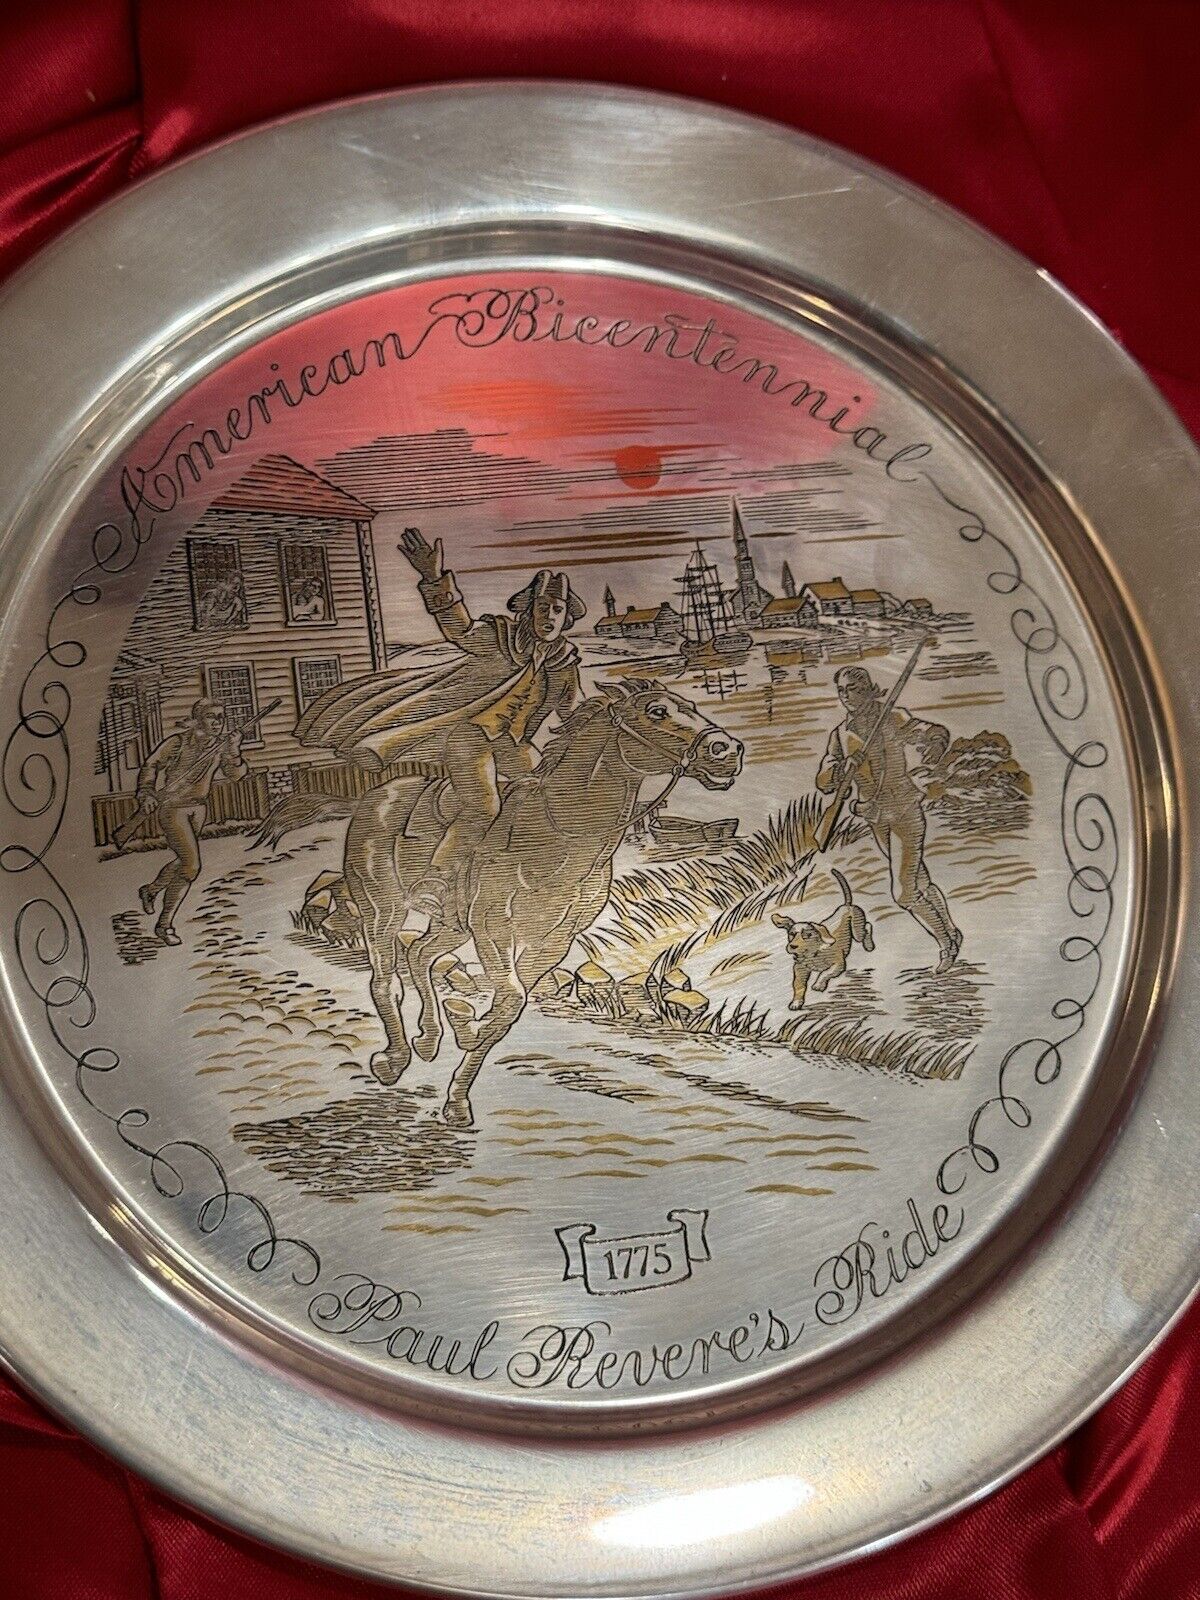 Antique vintage The Danbury Mint Sterling Silver plate Paul Revere's Ride-1775